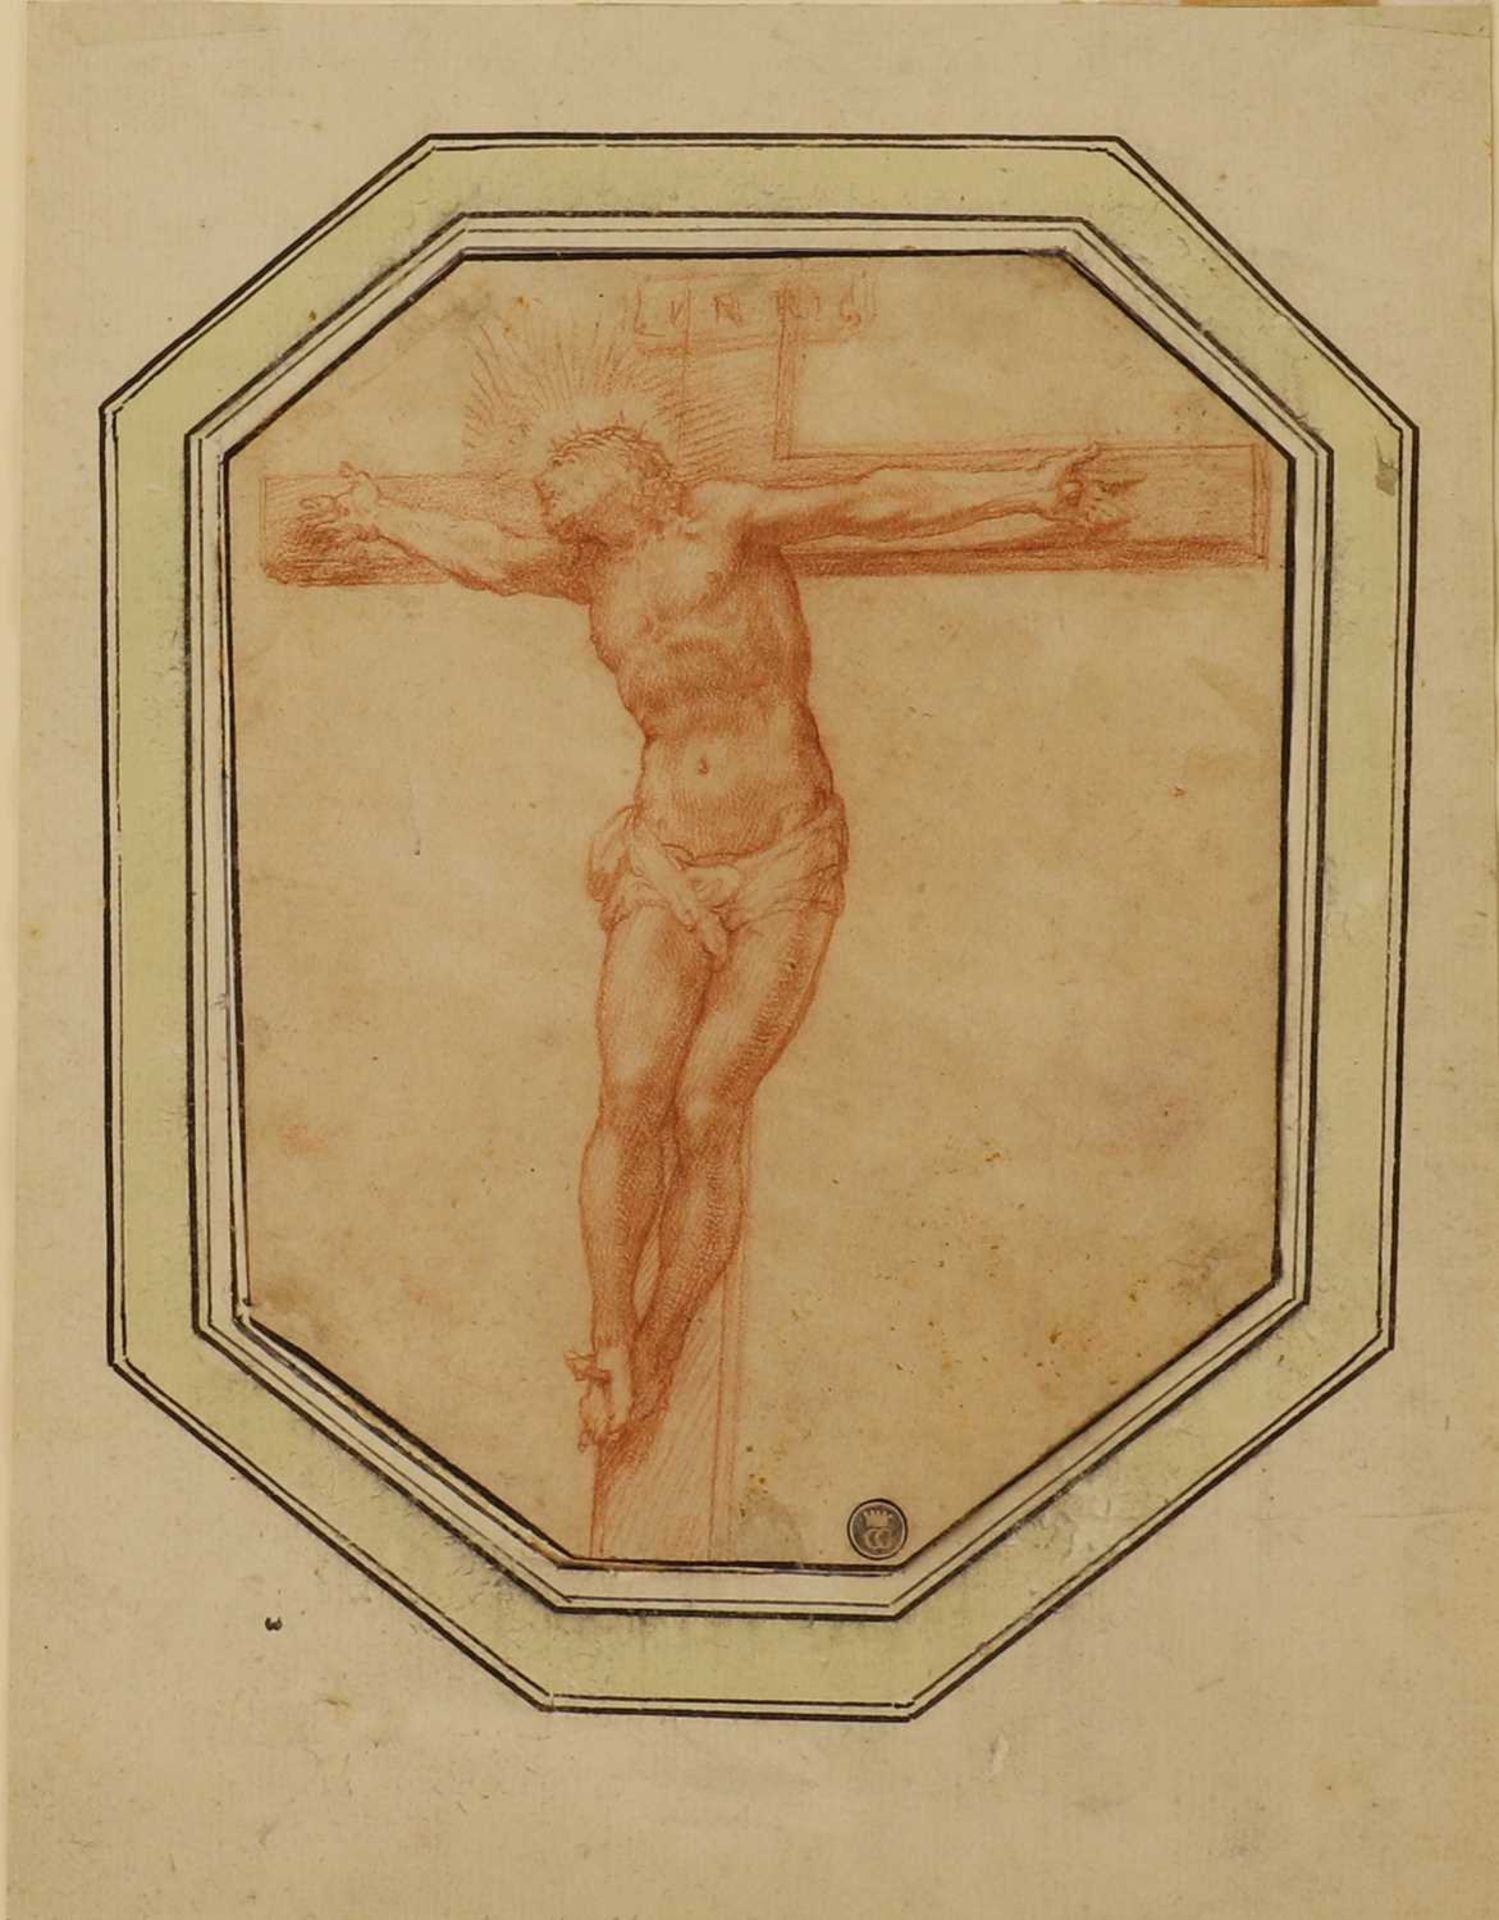 Attributed to Lelio Orsi da Novellara (Italian, 1511-1587)